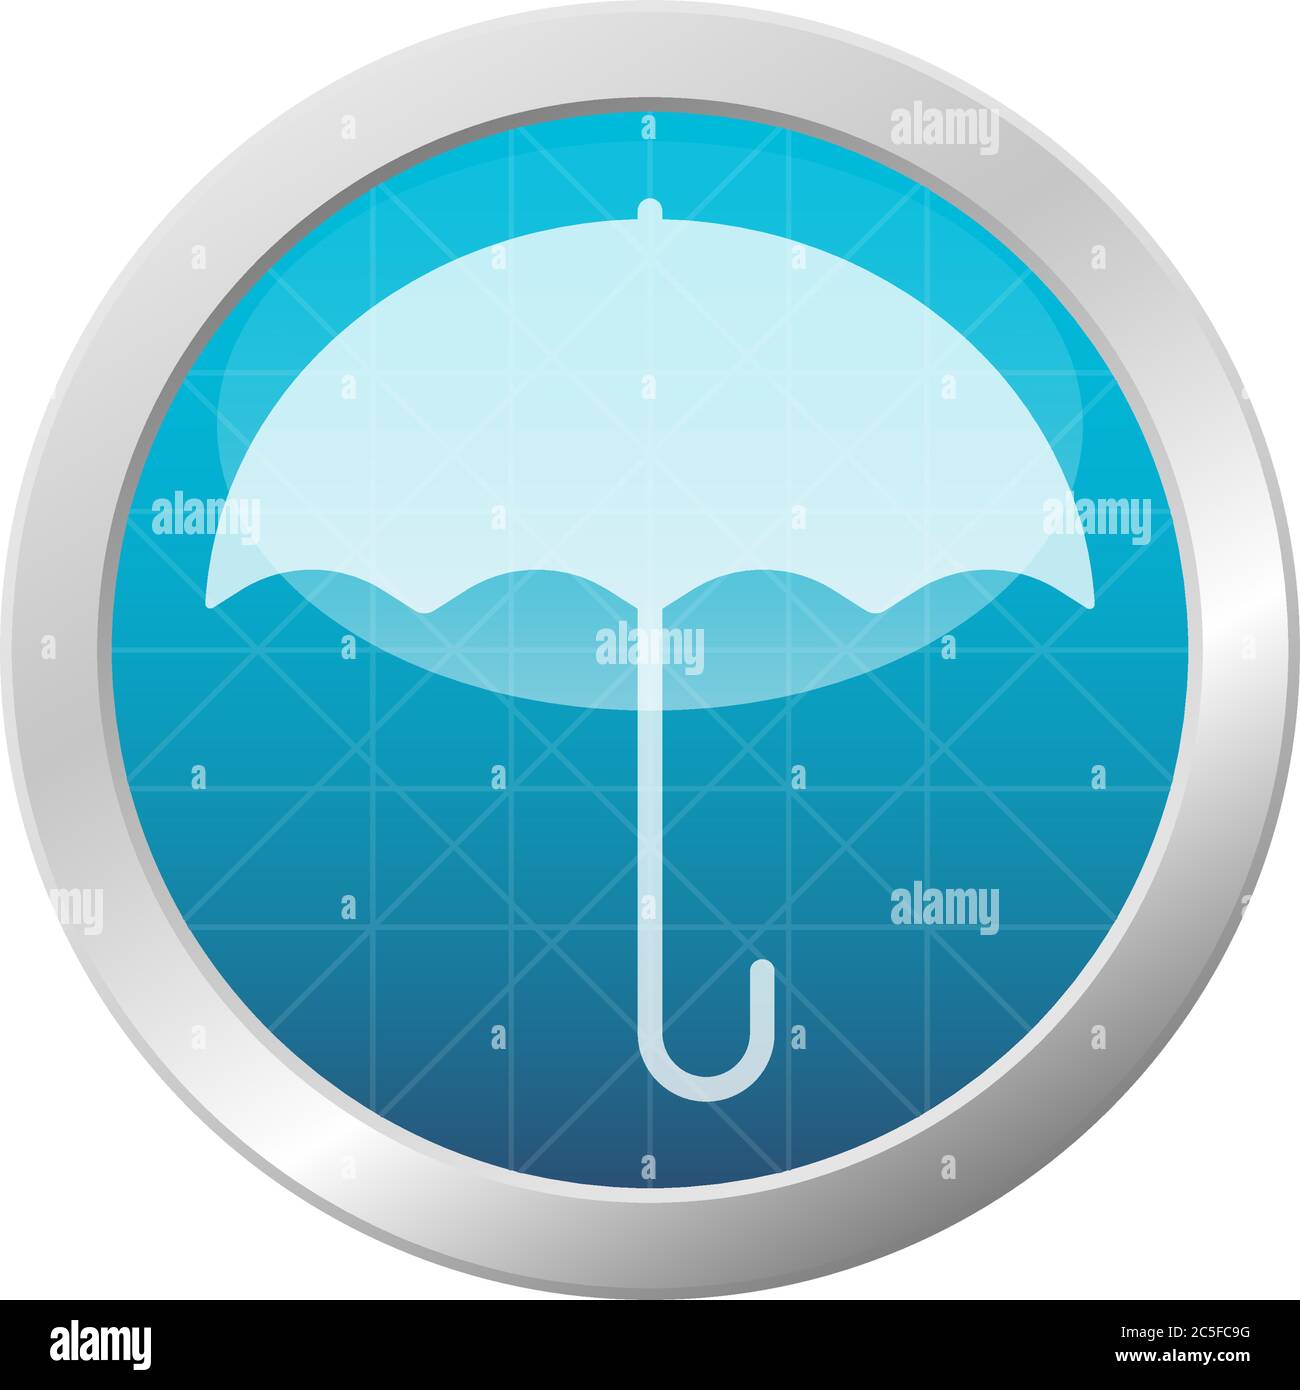 Öffnen Regenschirm Symbol Regenschutz isoliert auf hellblau glänzenden Kreis Rahmen Taste Vektor-Illustration Stock Vektor